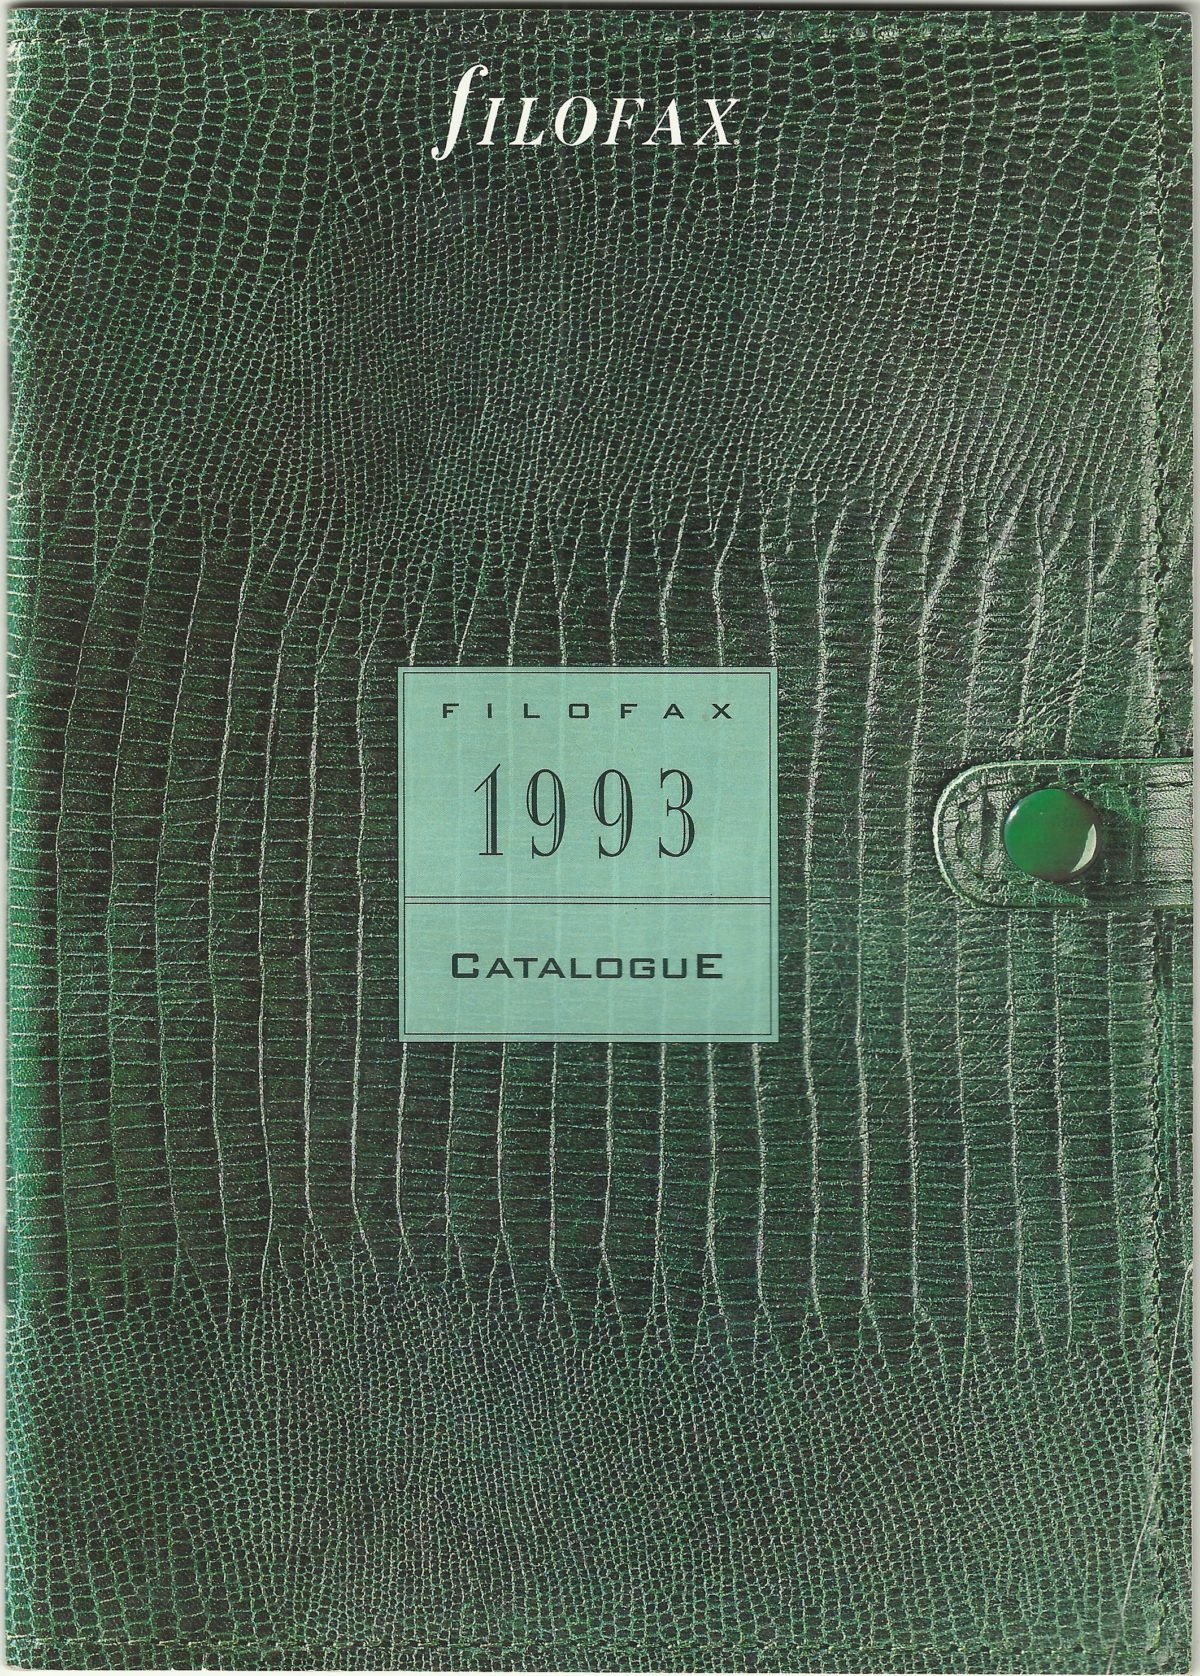 Filofax UK Full Catalogue 1993/94